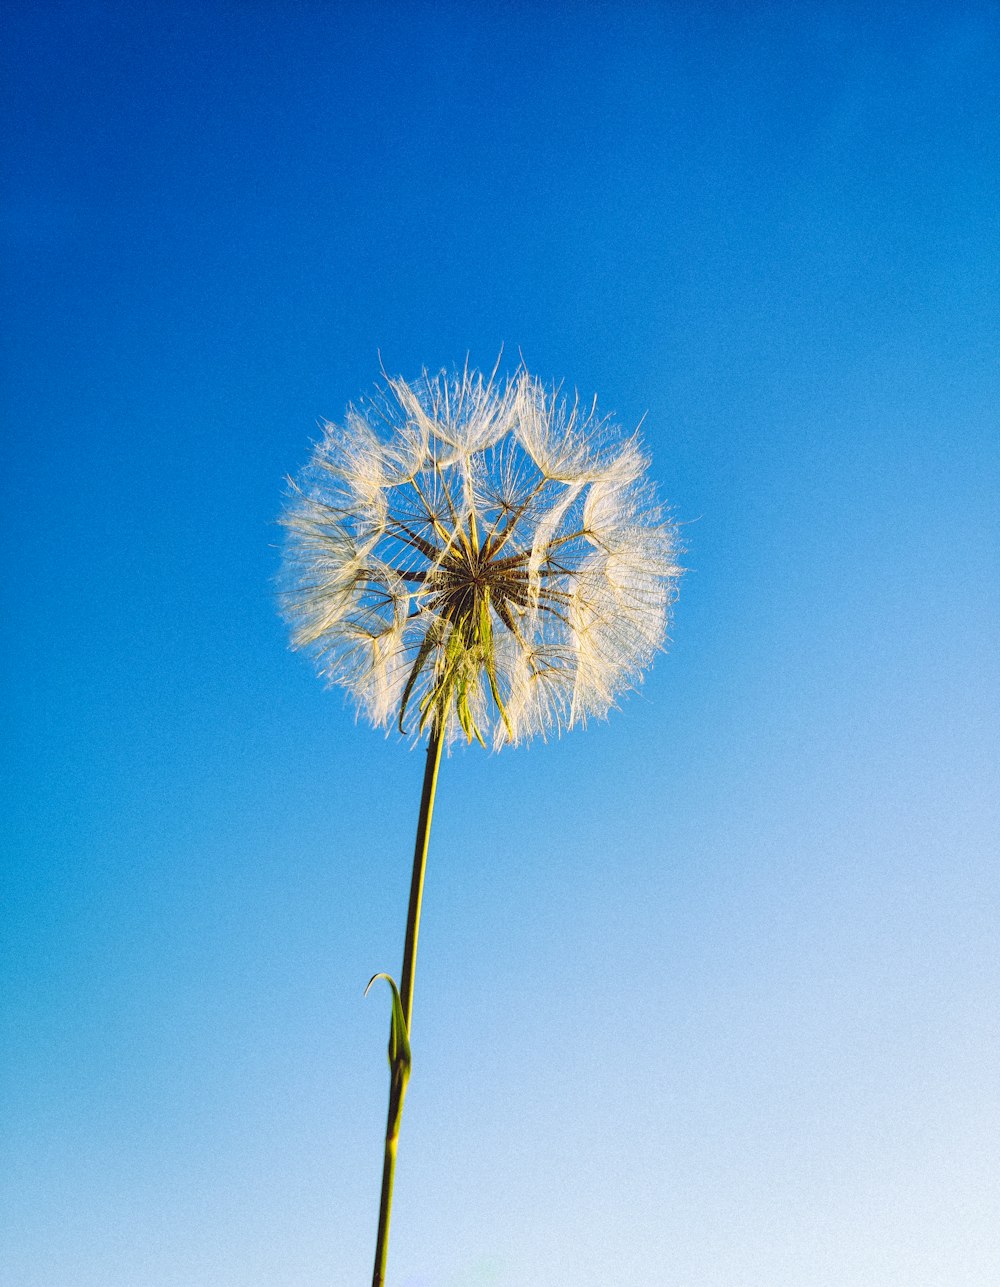 a dandelion flower against a blue sky